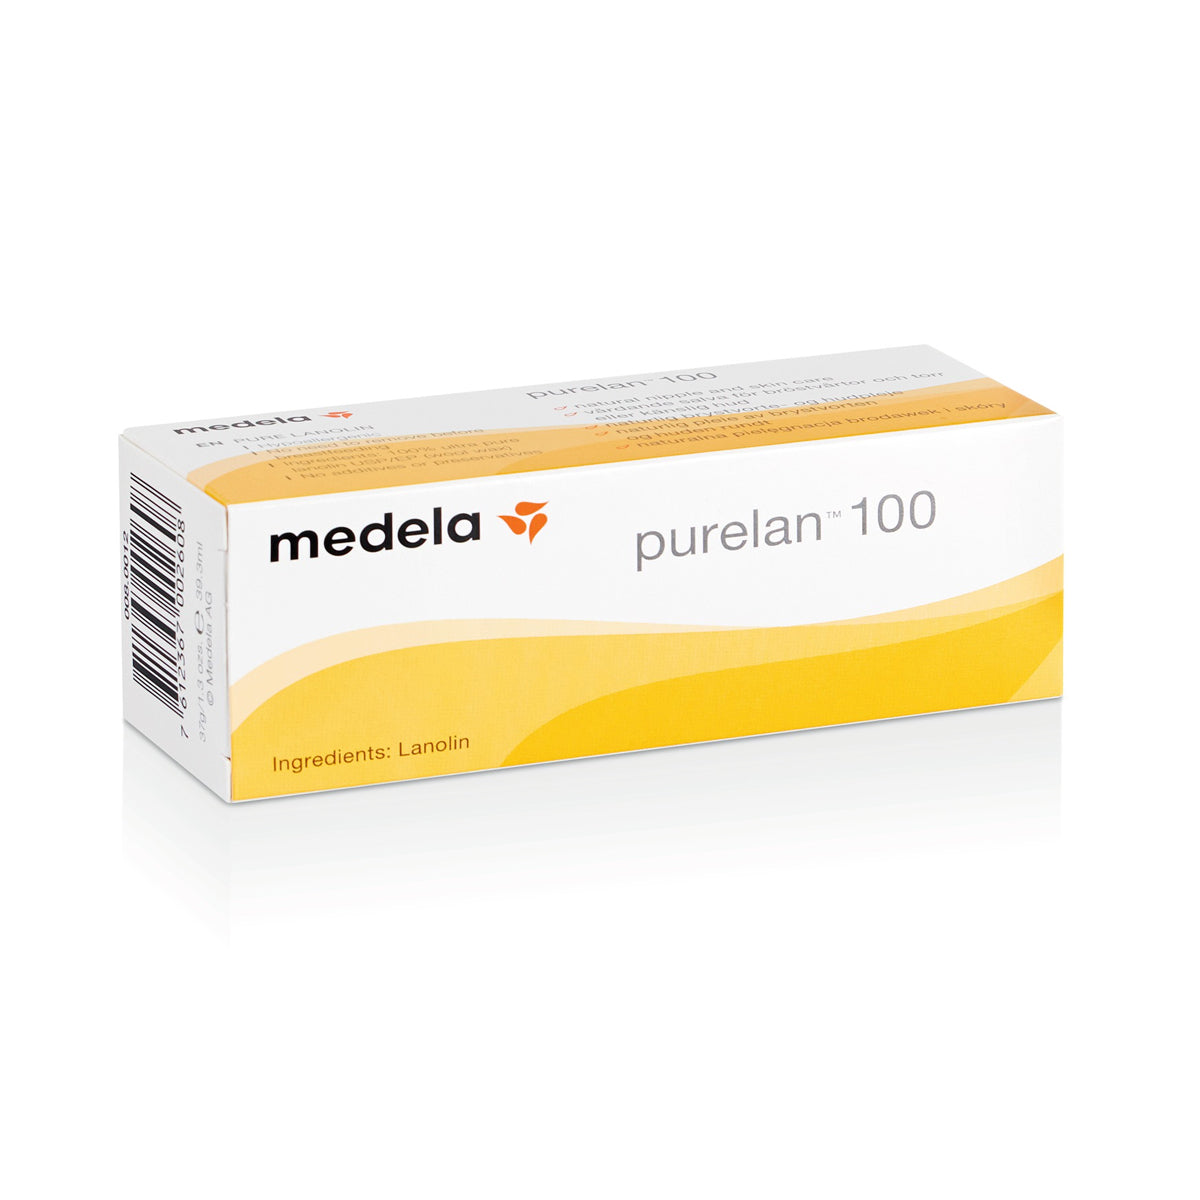 Medela - Purelan cream